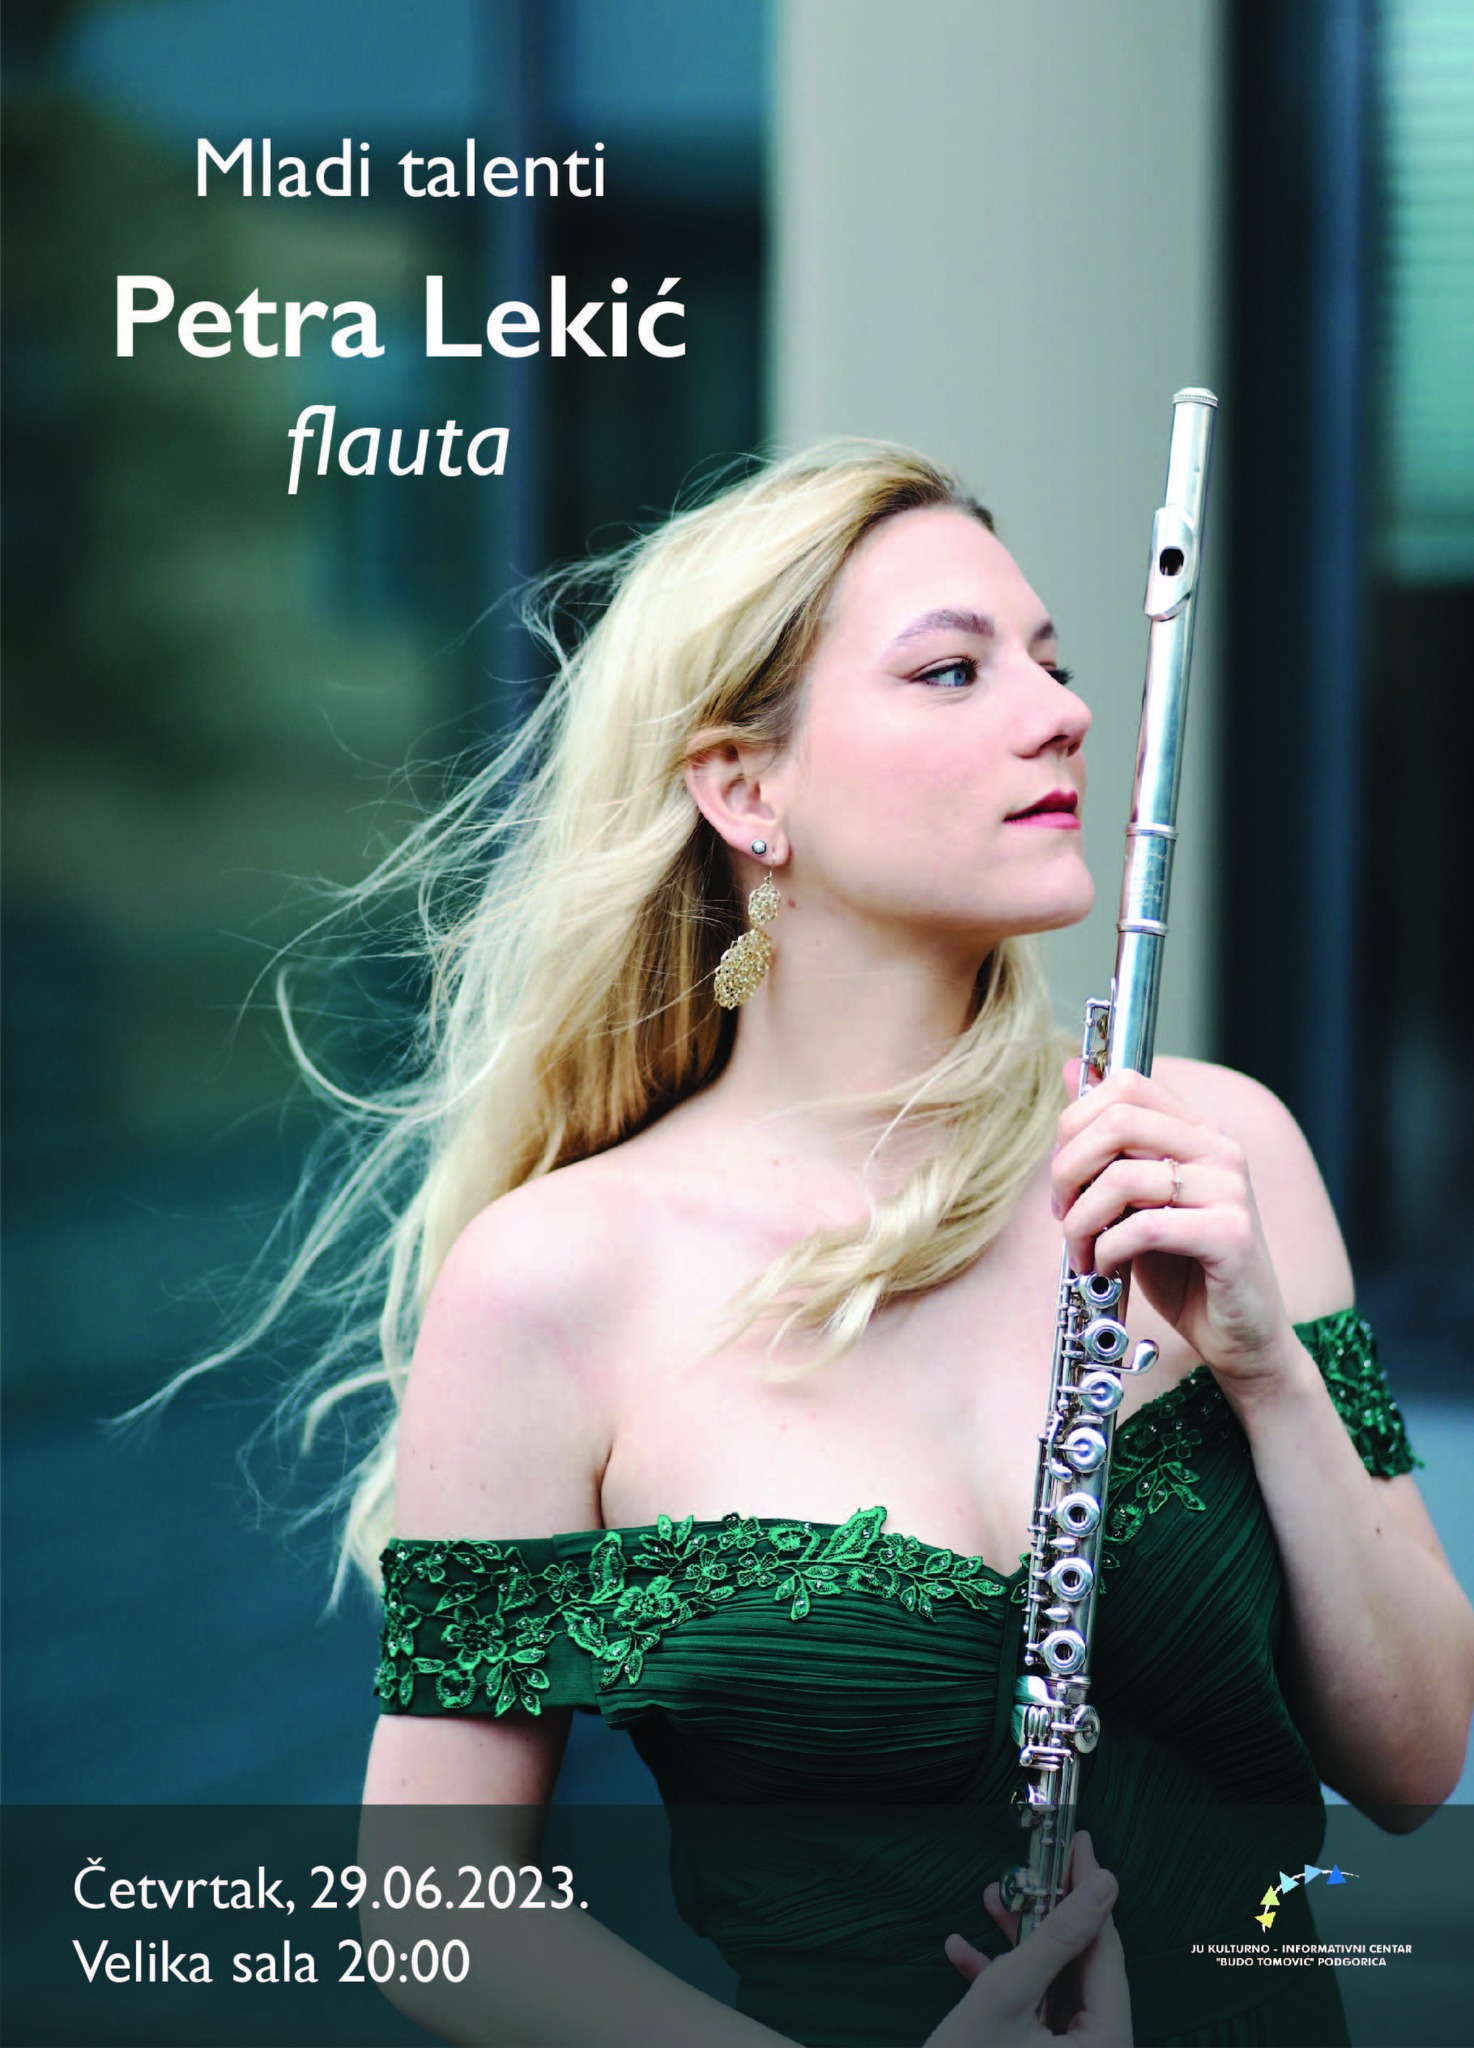 Solistički koncert flautistkinje Petre Lekić